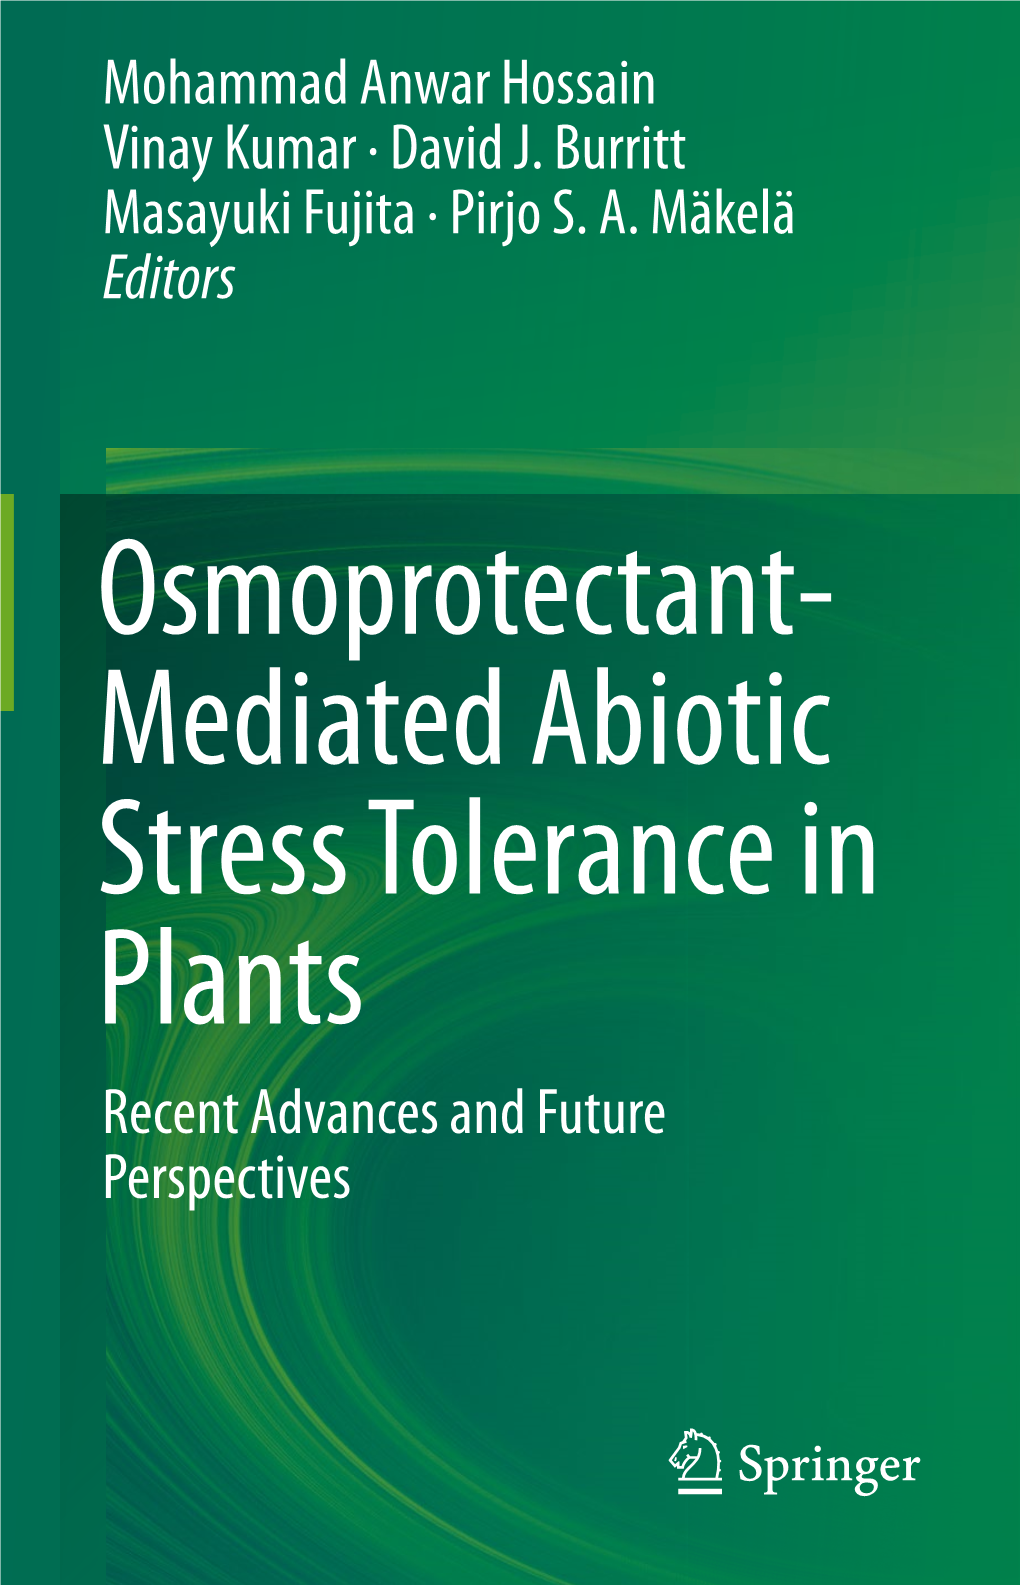 Osmoprotectant- Mediated Abiotic Stress Tolerance in Plants